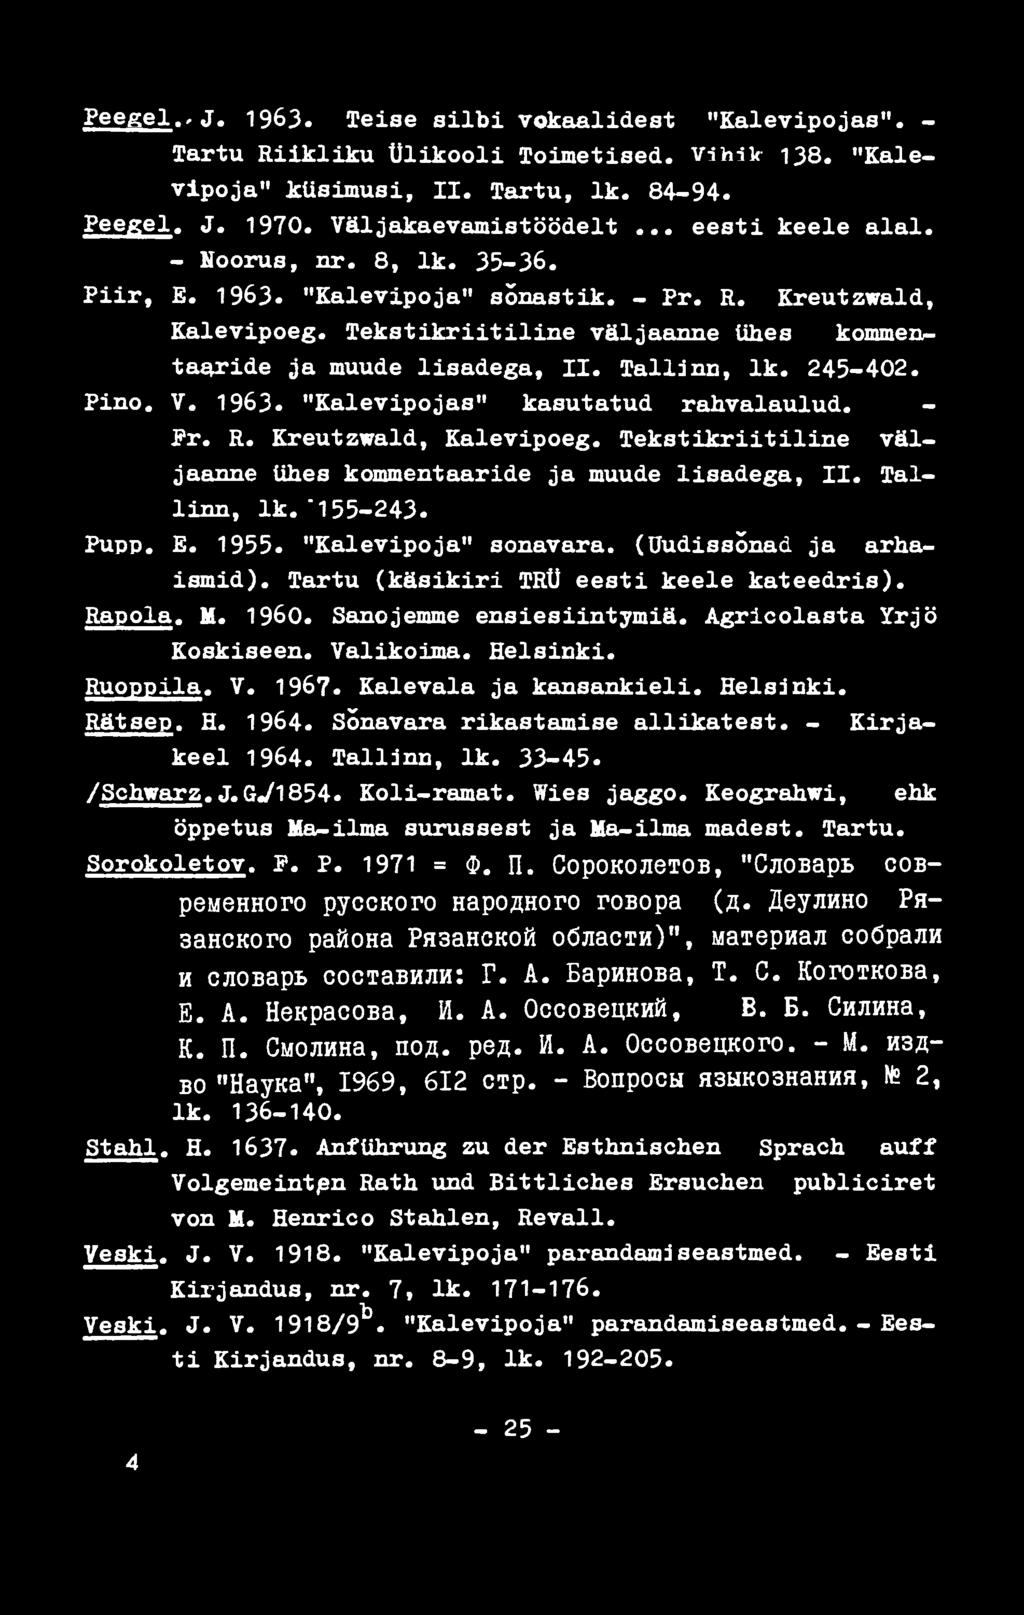 Ruoppila. V. 1967. Kalevala ja kansankieli. Helsinki. Rätsep. H. 1964. Sõnavara rikastamise allikatest. - Kirjakeel 1964. Tallinn, lk. 33-45. /Schwarz.J.G^1854. Koli-ramat. Wies jaggo.